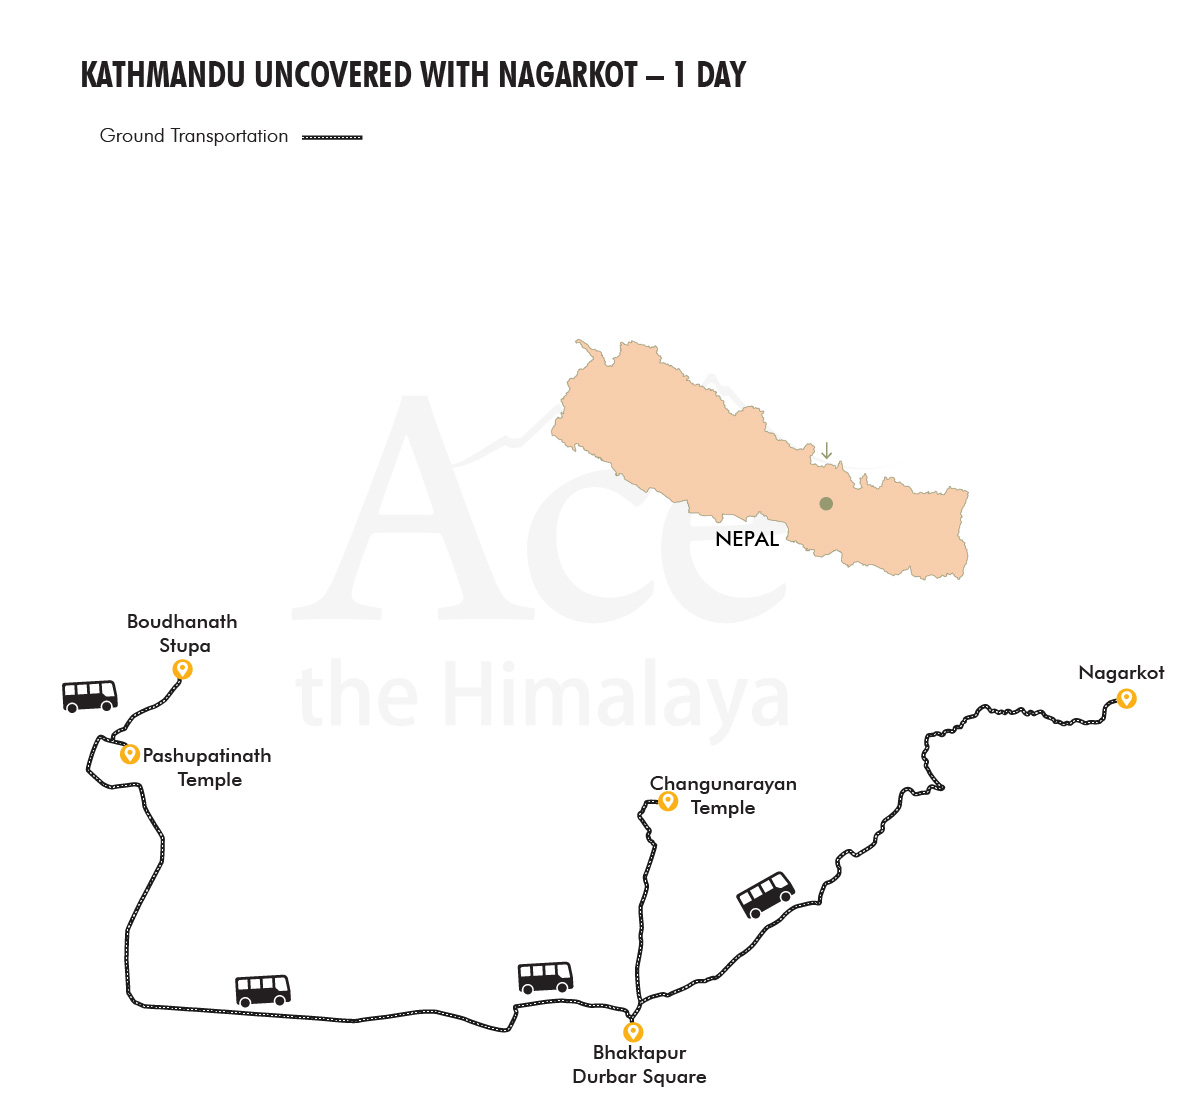 Kathmandu Uncovered with Nagarkot